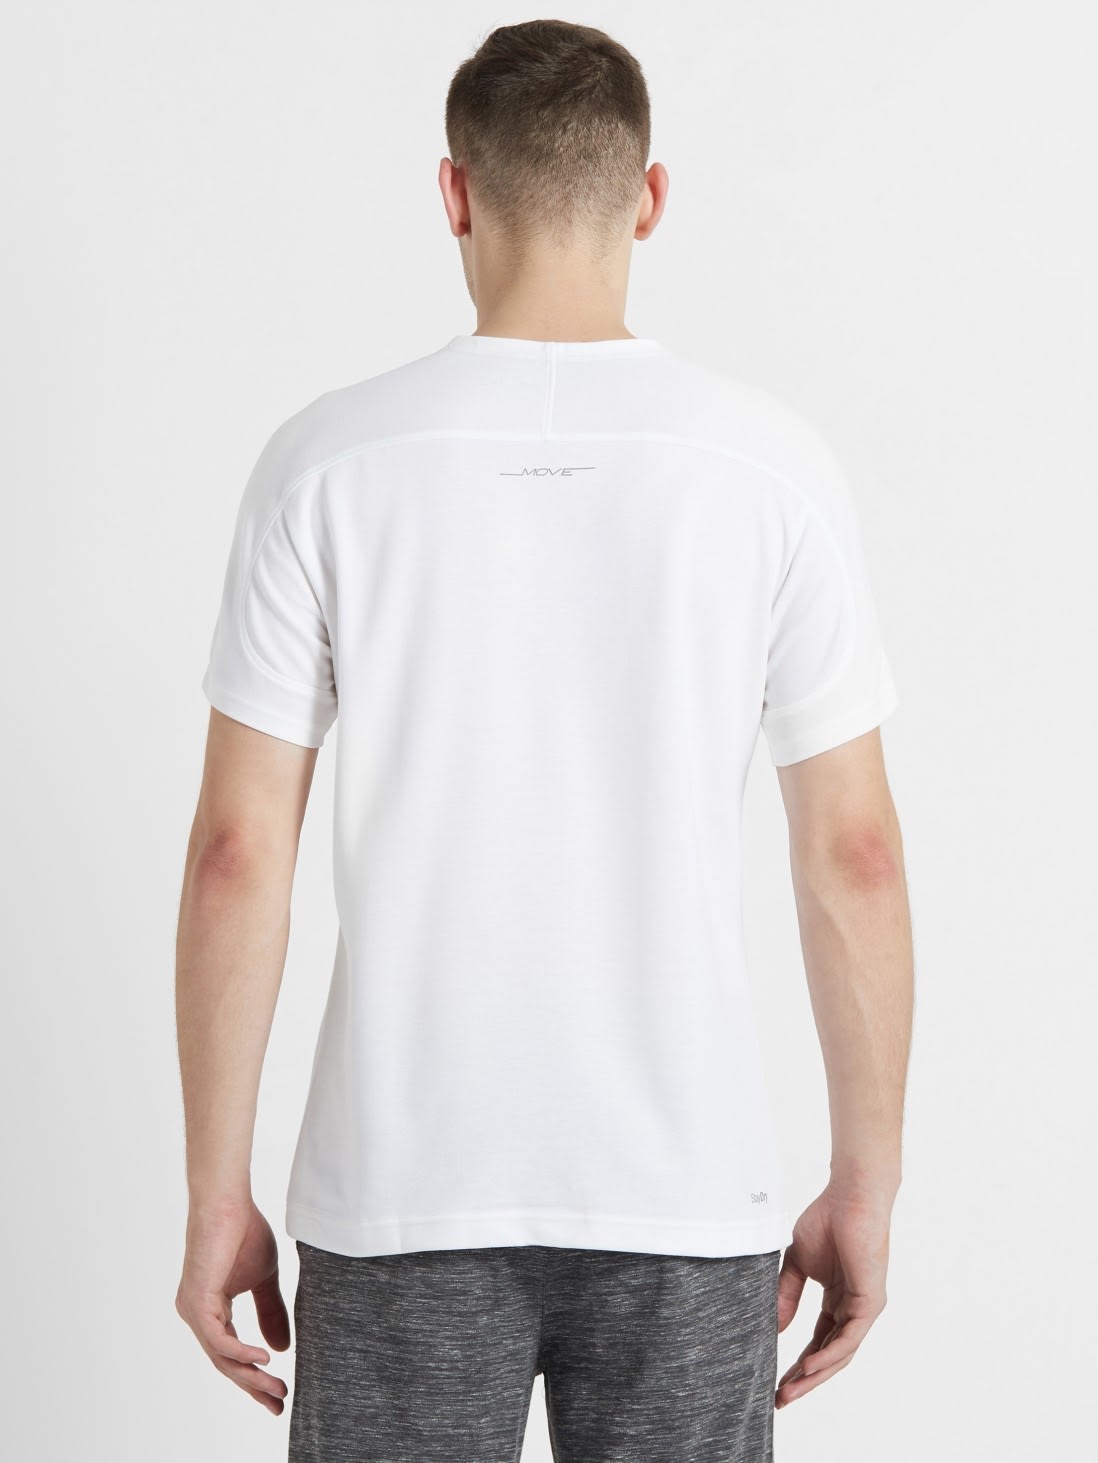 Jockey Men Apparel Tops | White T-Shirt